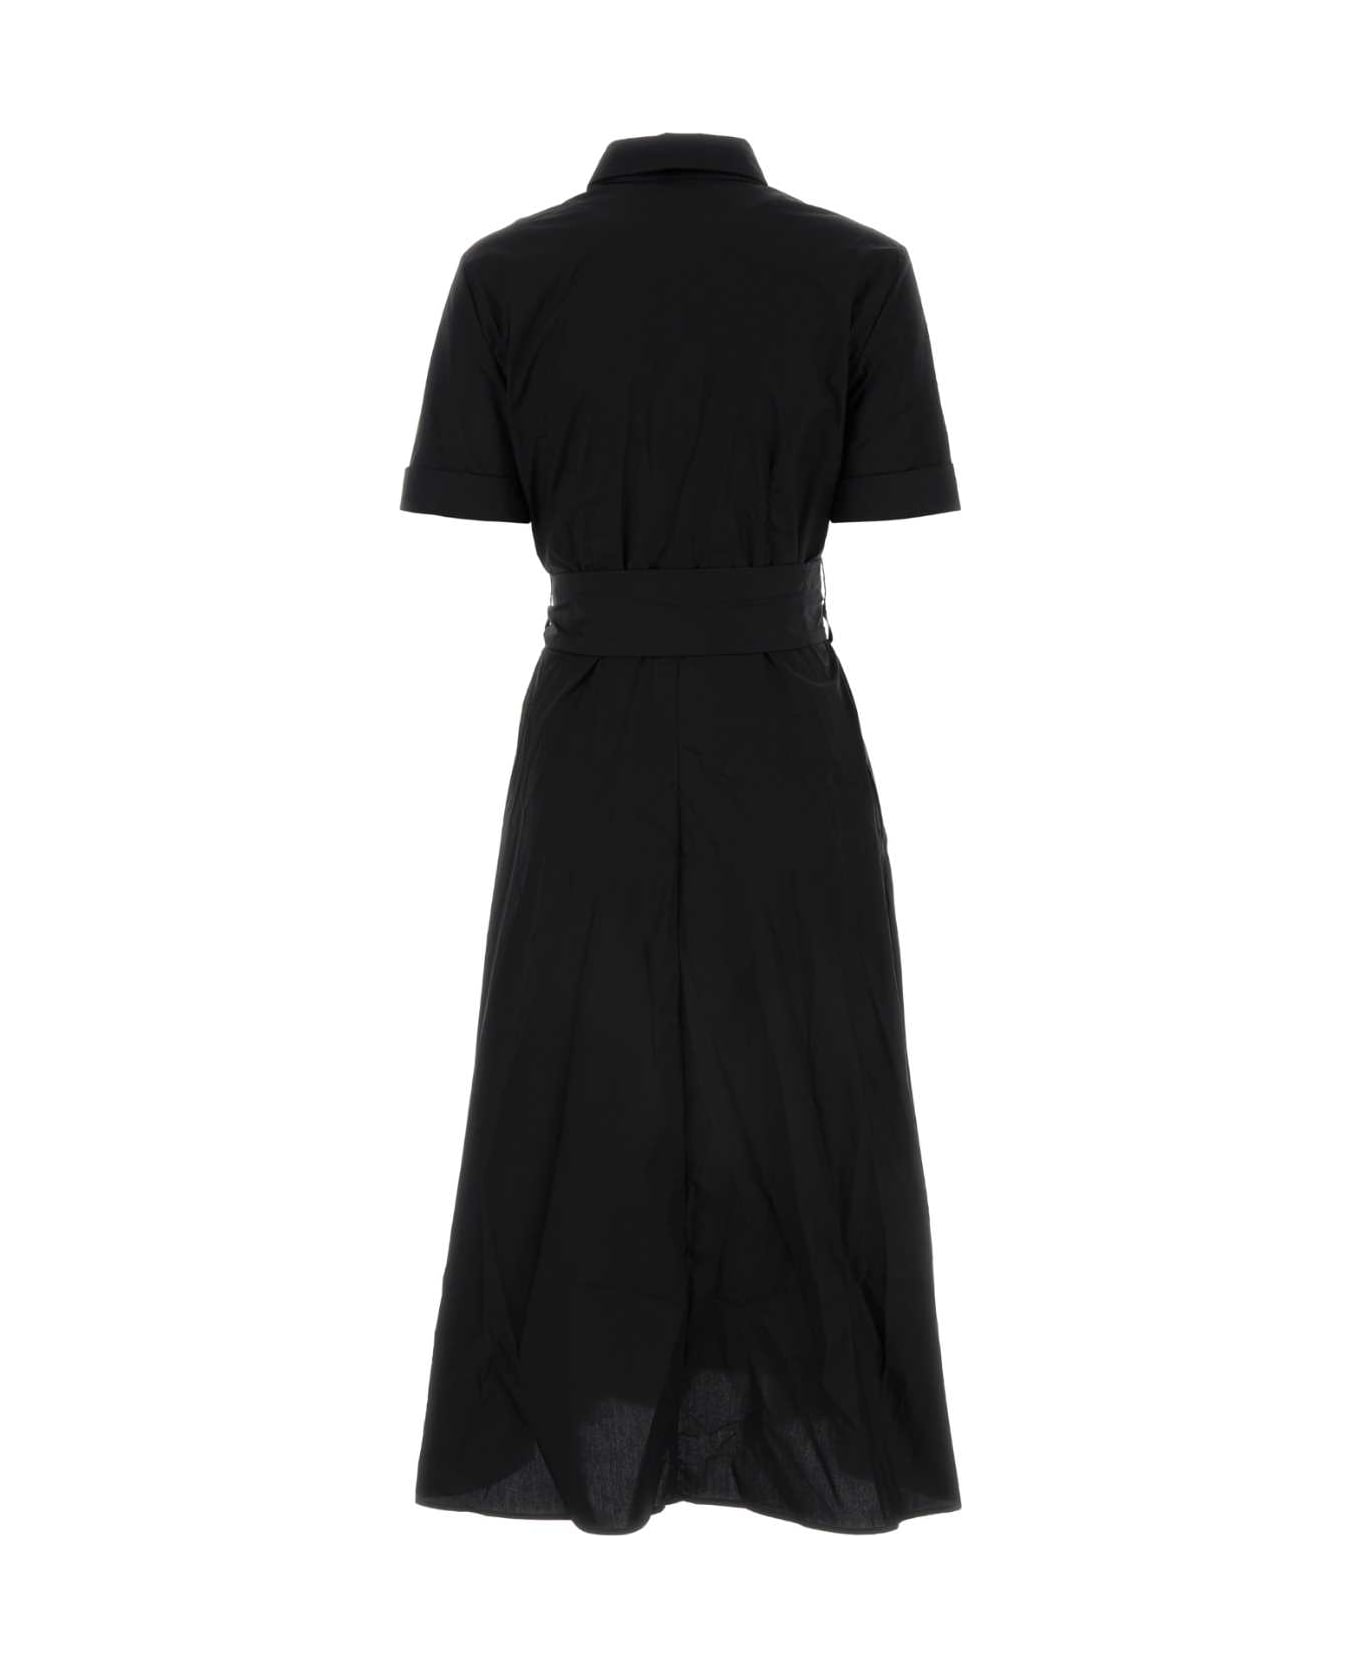 Woolrich Black Cotton Shirt Dress - Black